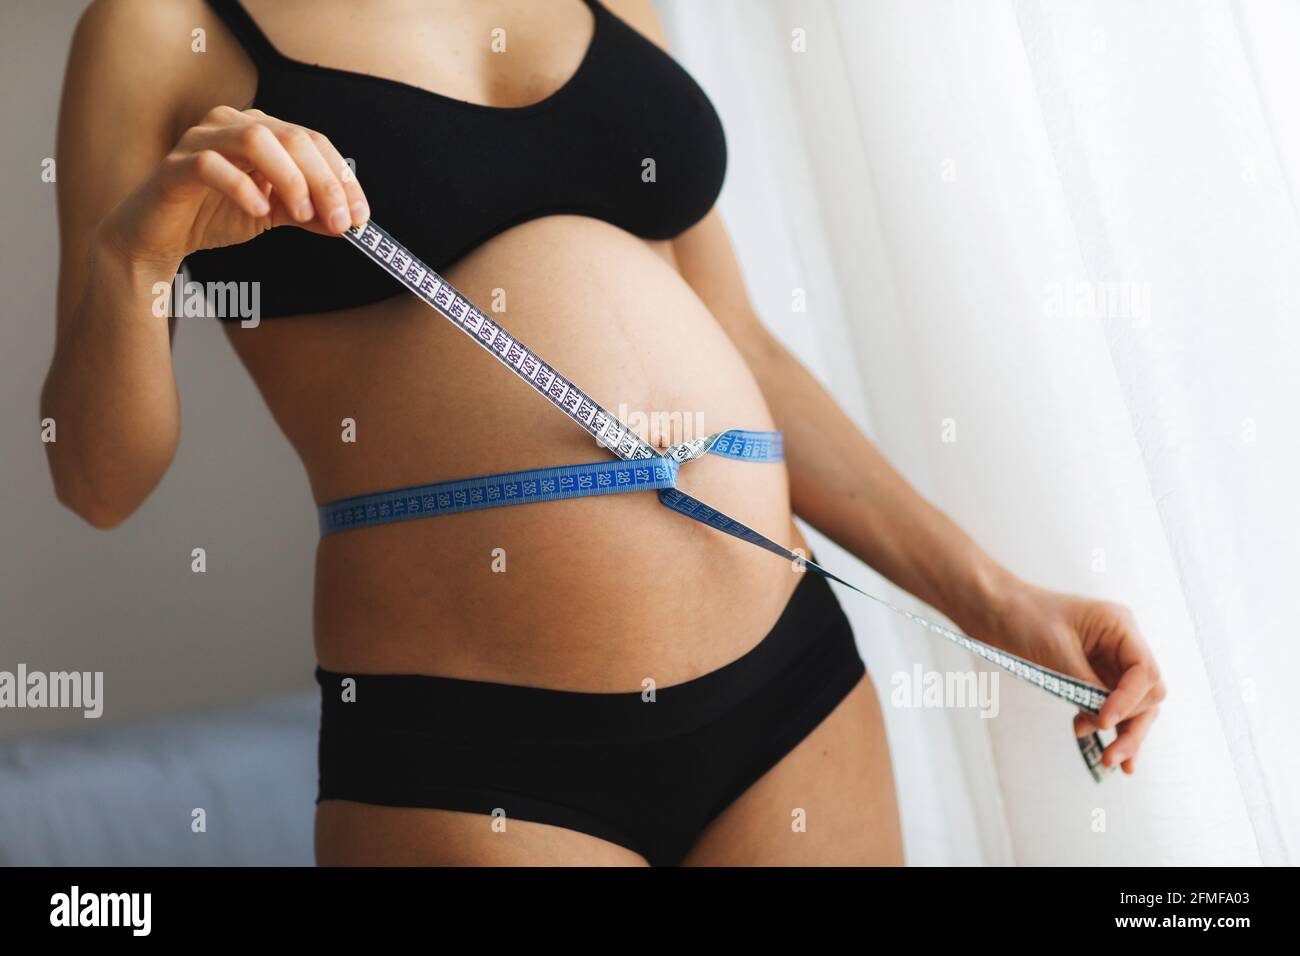 Female Body Measurement Tape Stock Photo 57150043, Body Measurement Tape 